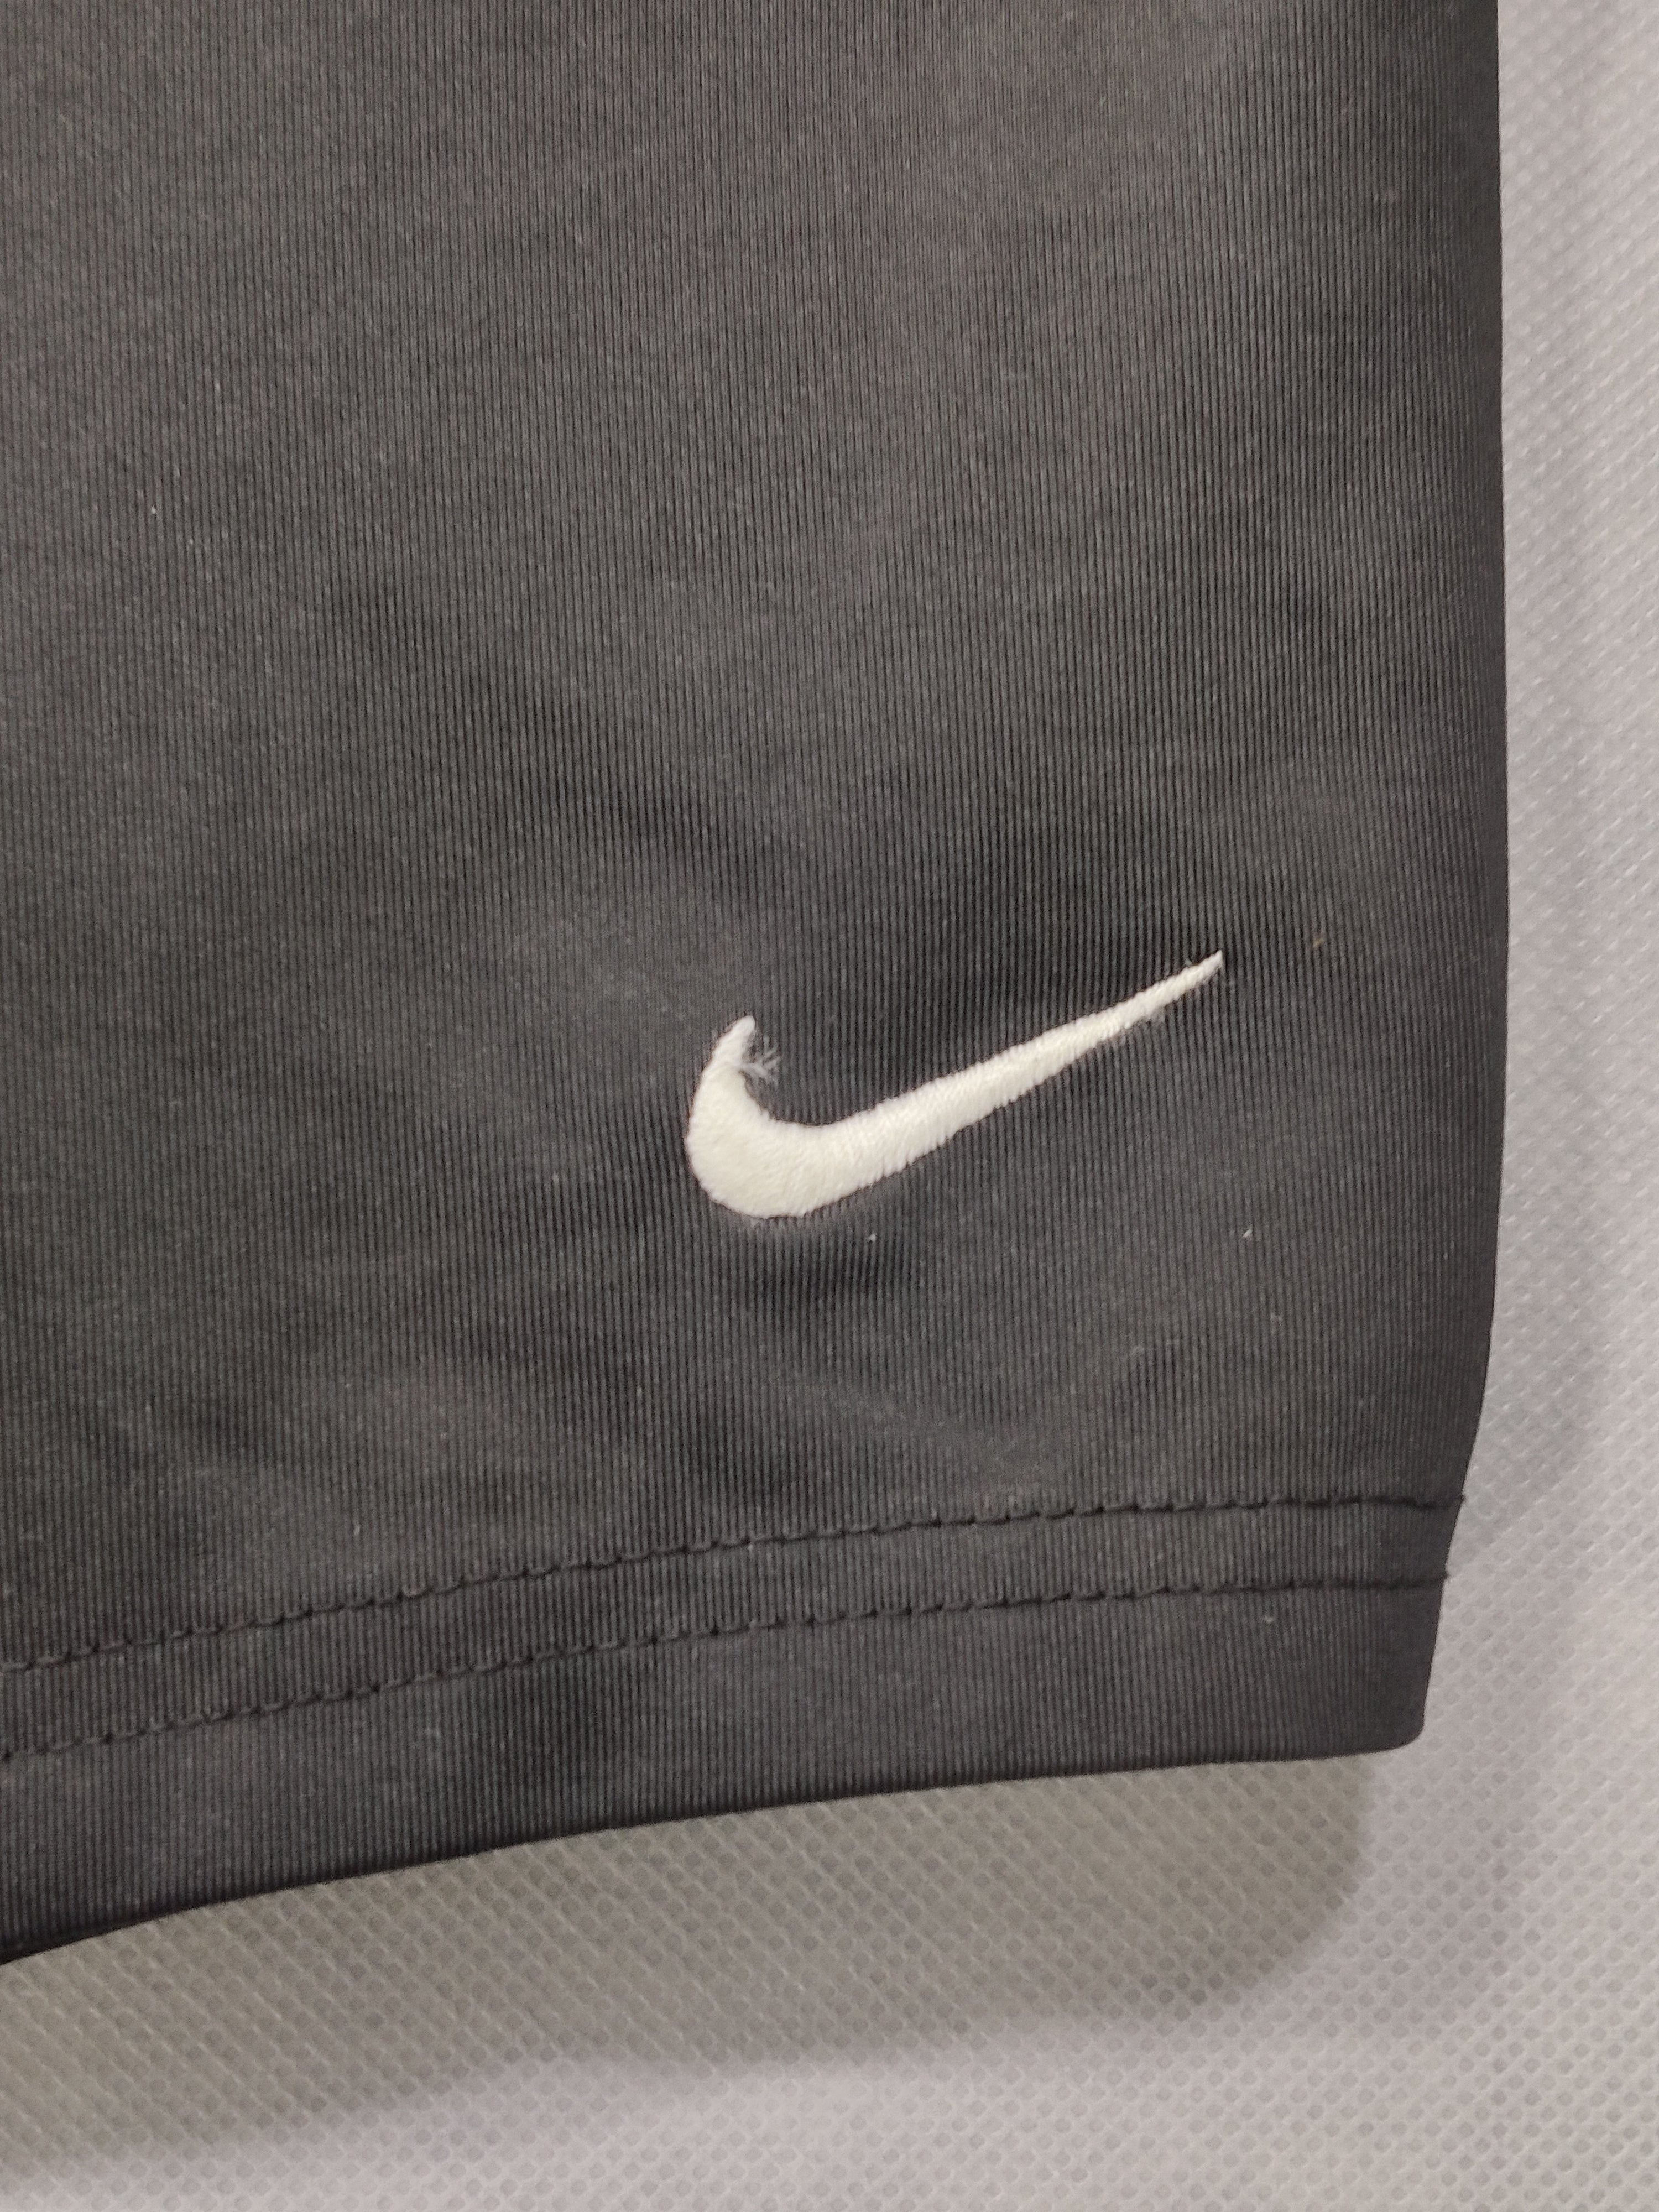 Nike Branded Original Gym  Underwear For Women